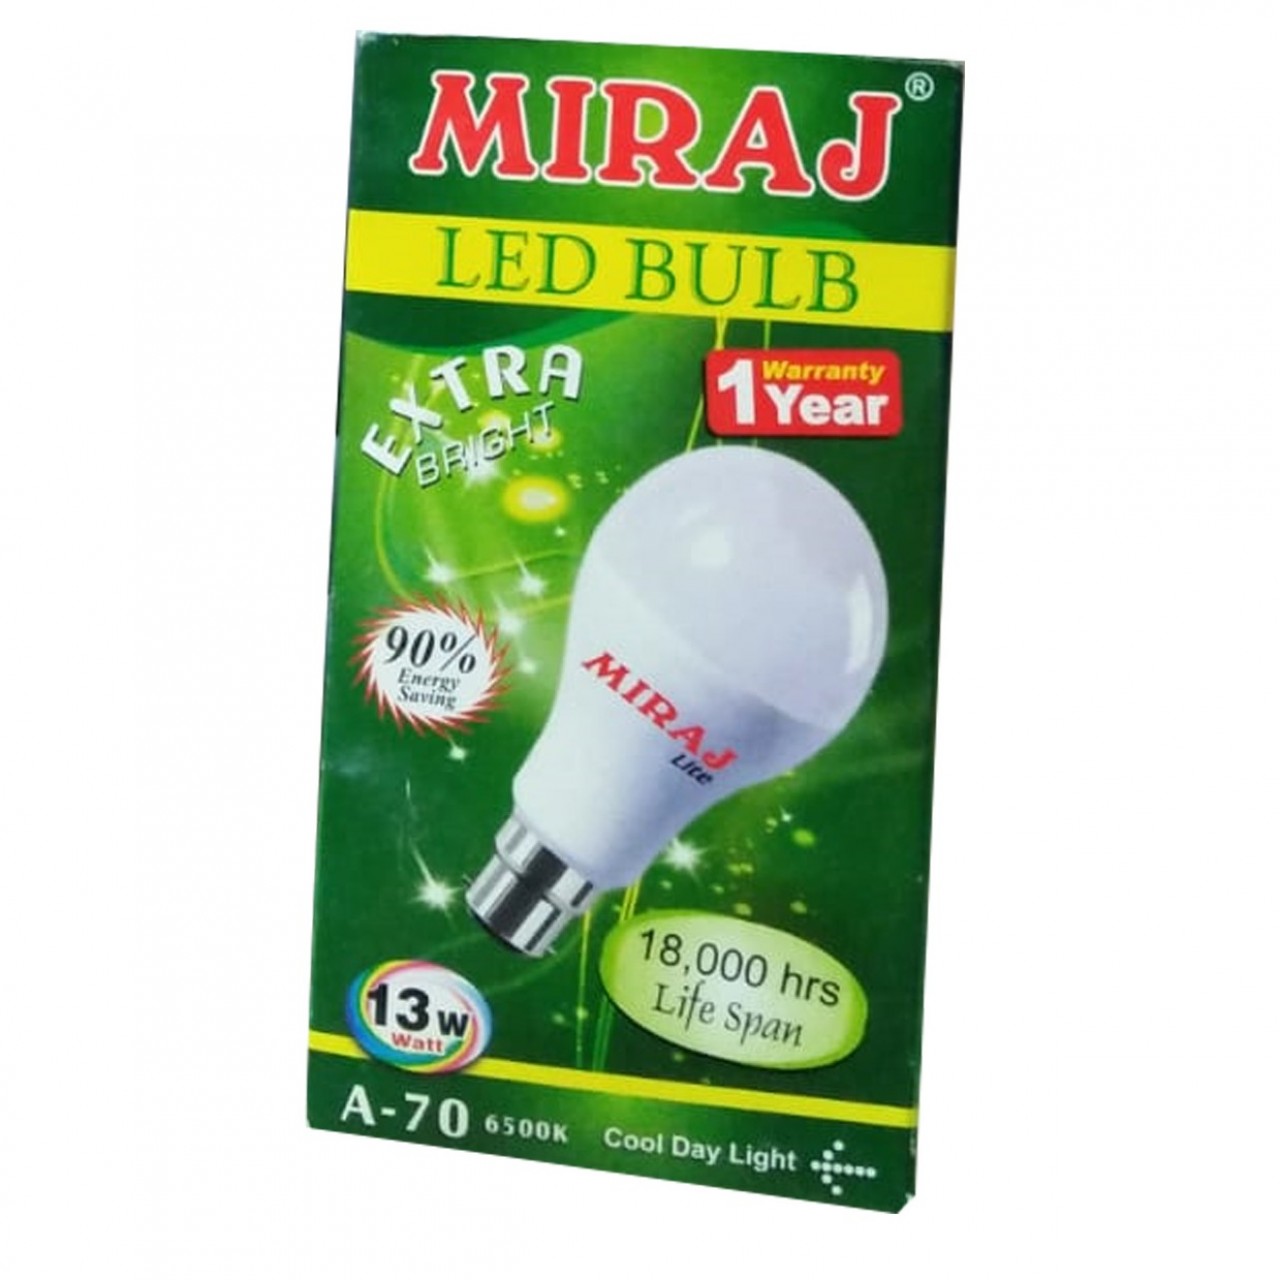 Miraj A-70 Extra Bright LED Bulb - 13Watt - 1 Year Warranty